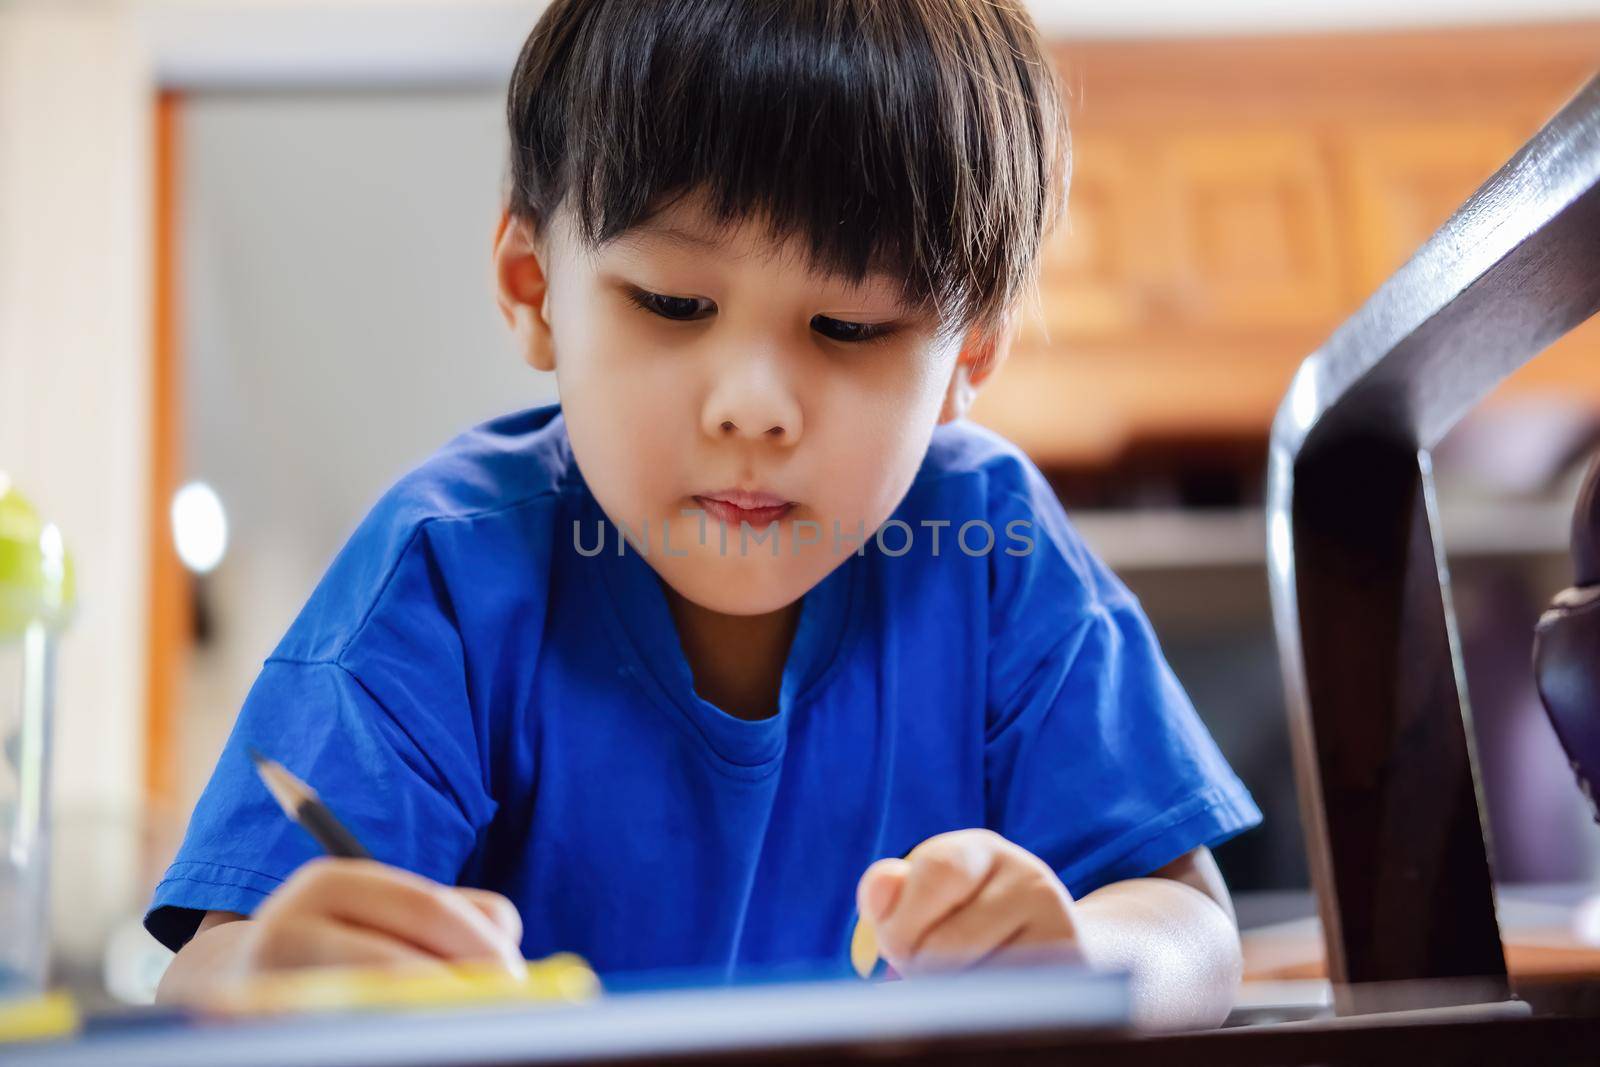 kindergarten children coloring their homework to the teacher